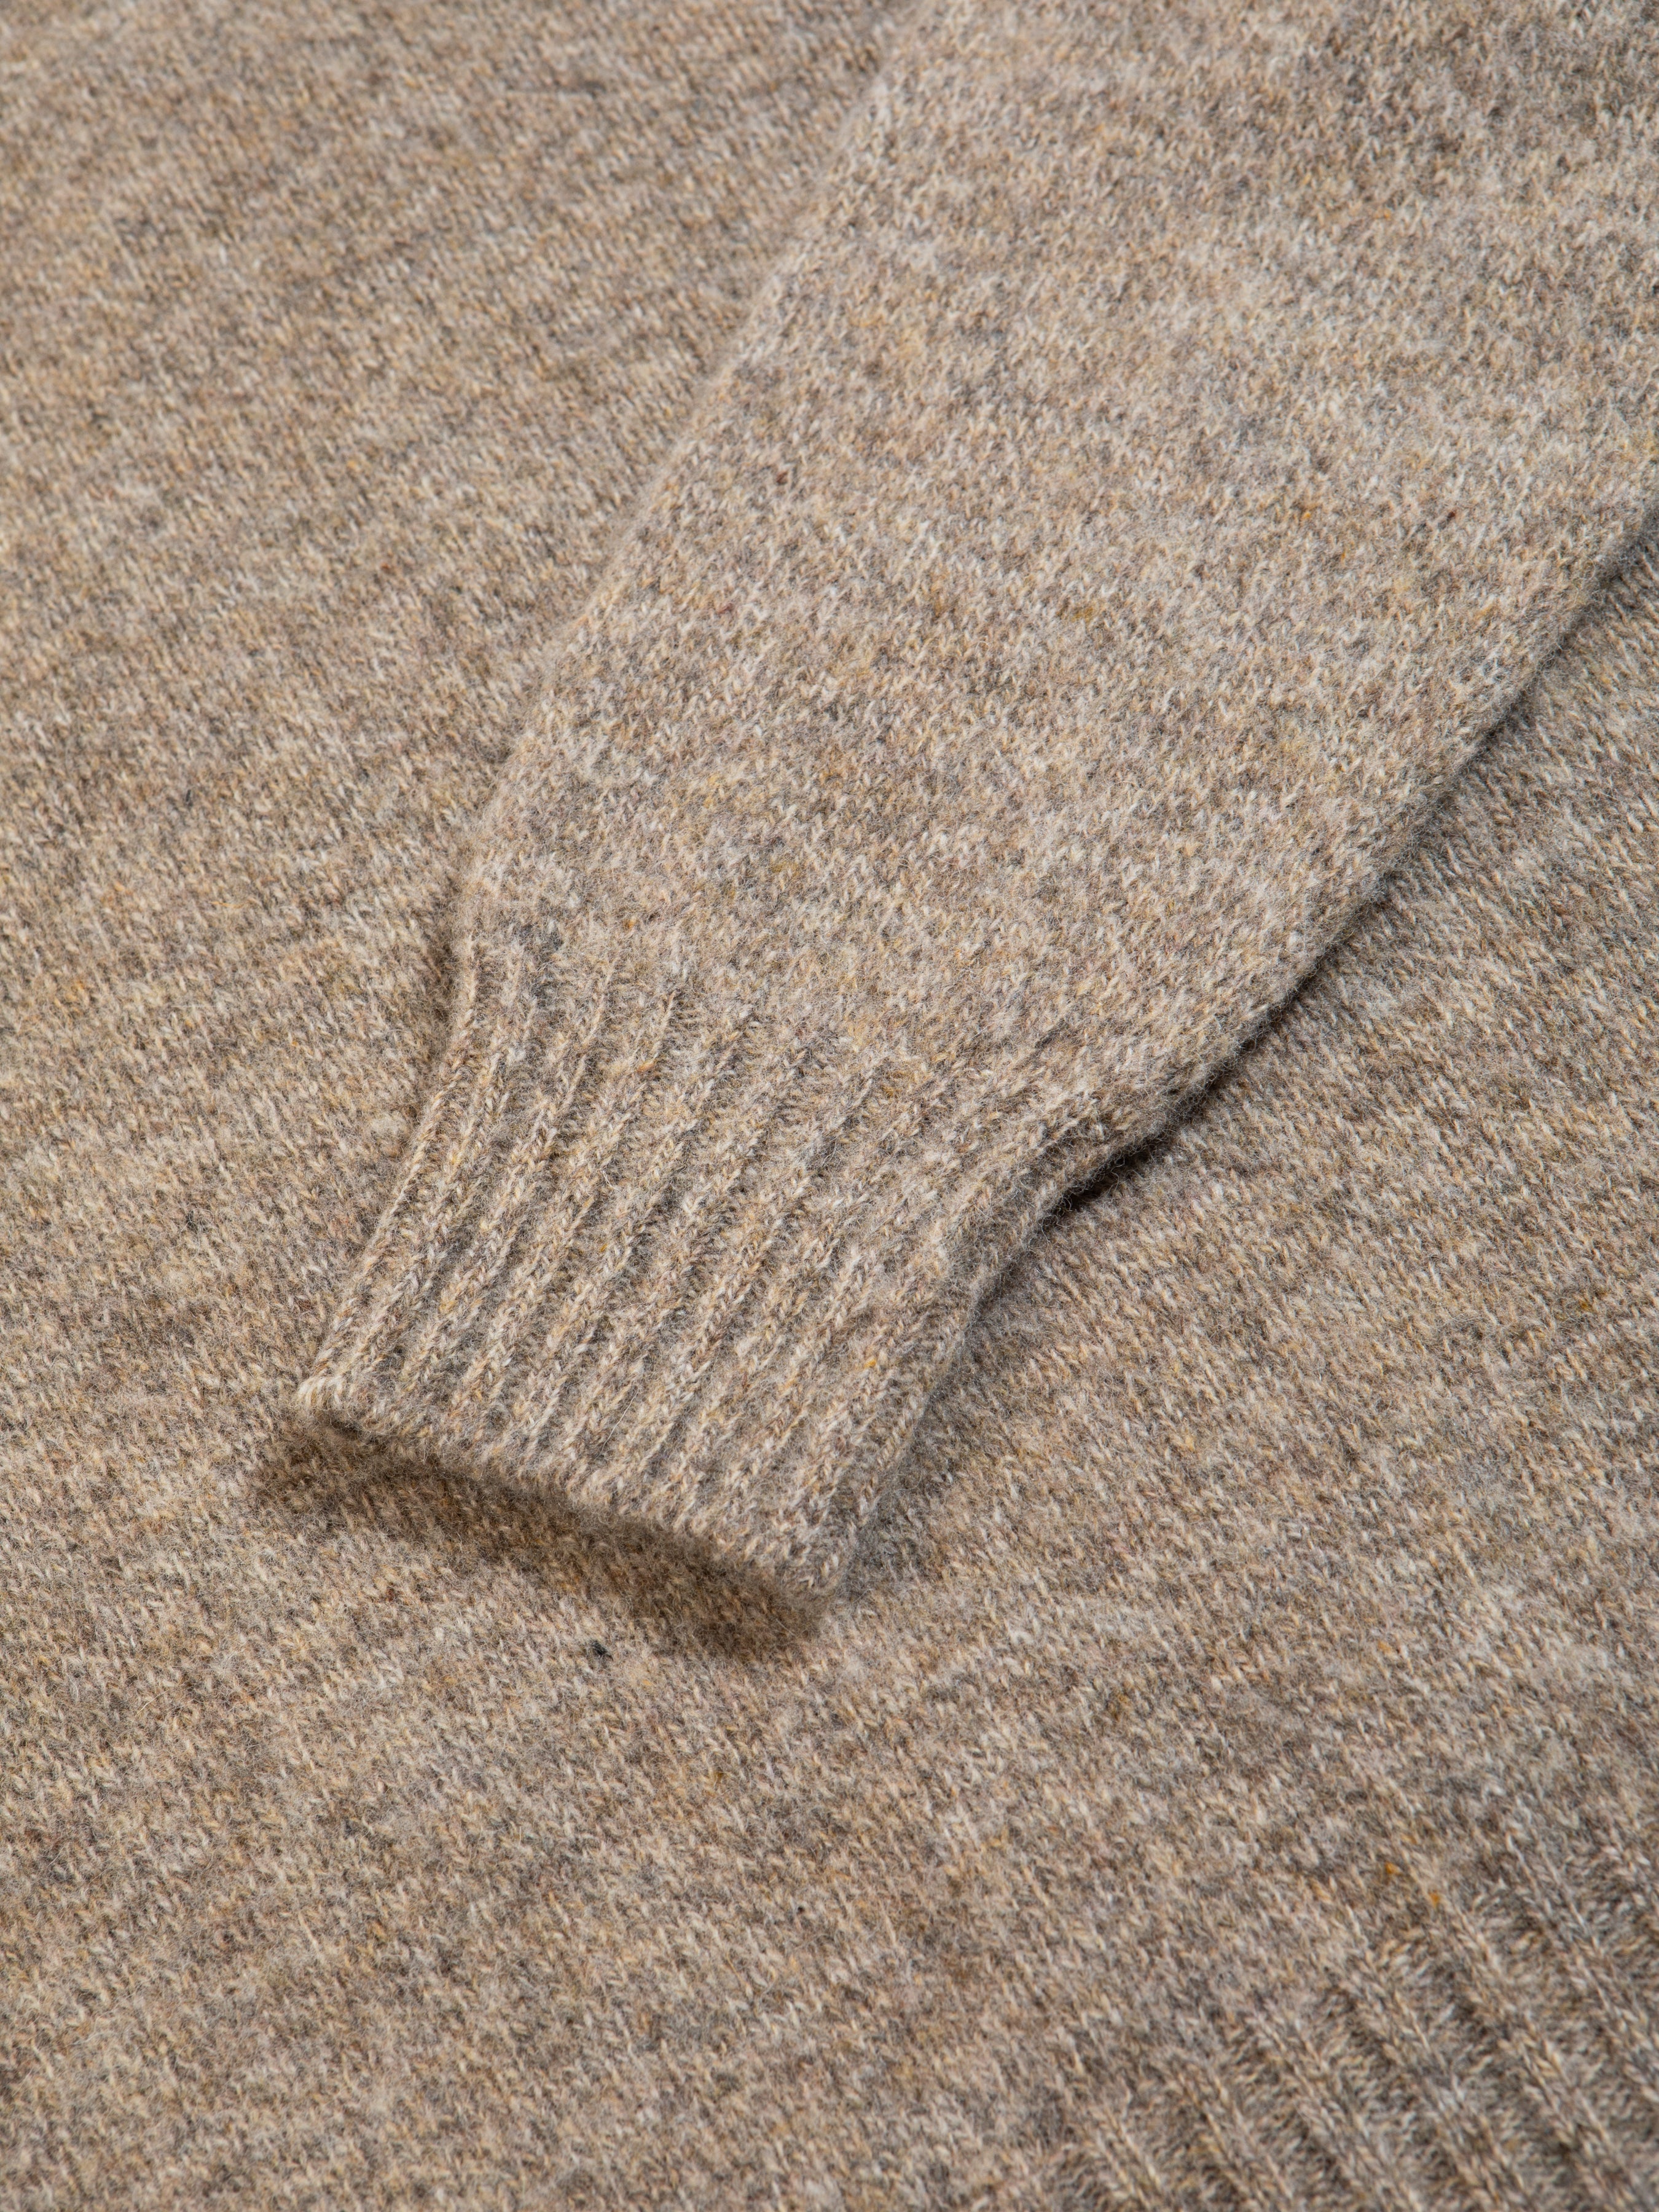 The ribbed cuff from Scottish menswear brand KESTIN's Shetland Wool Sweater.